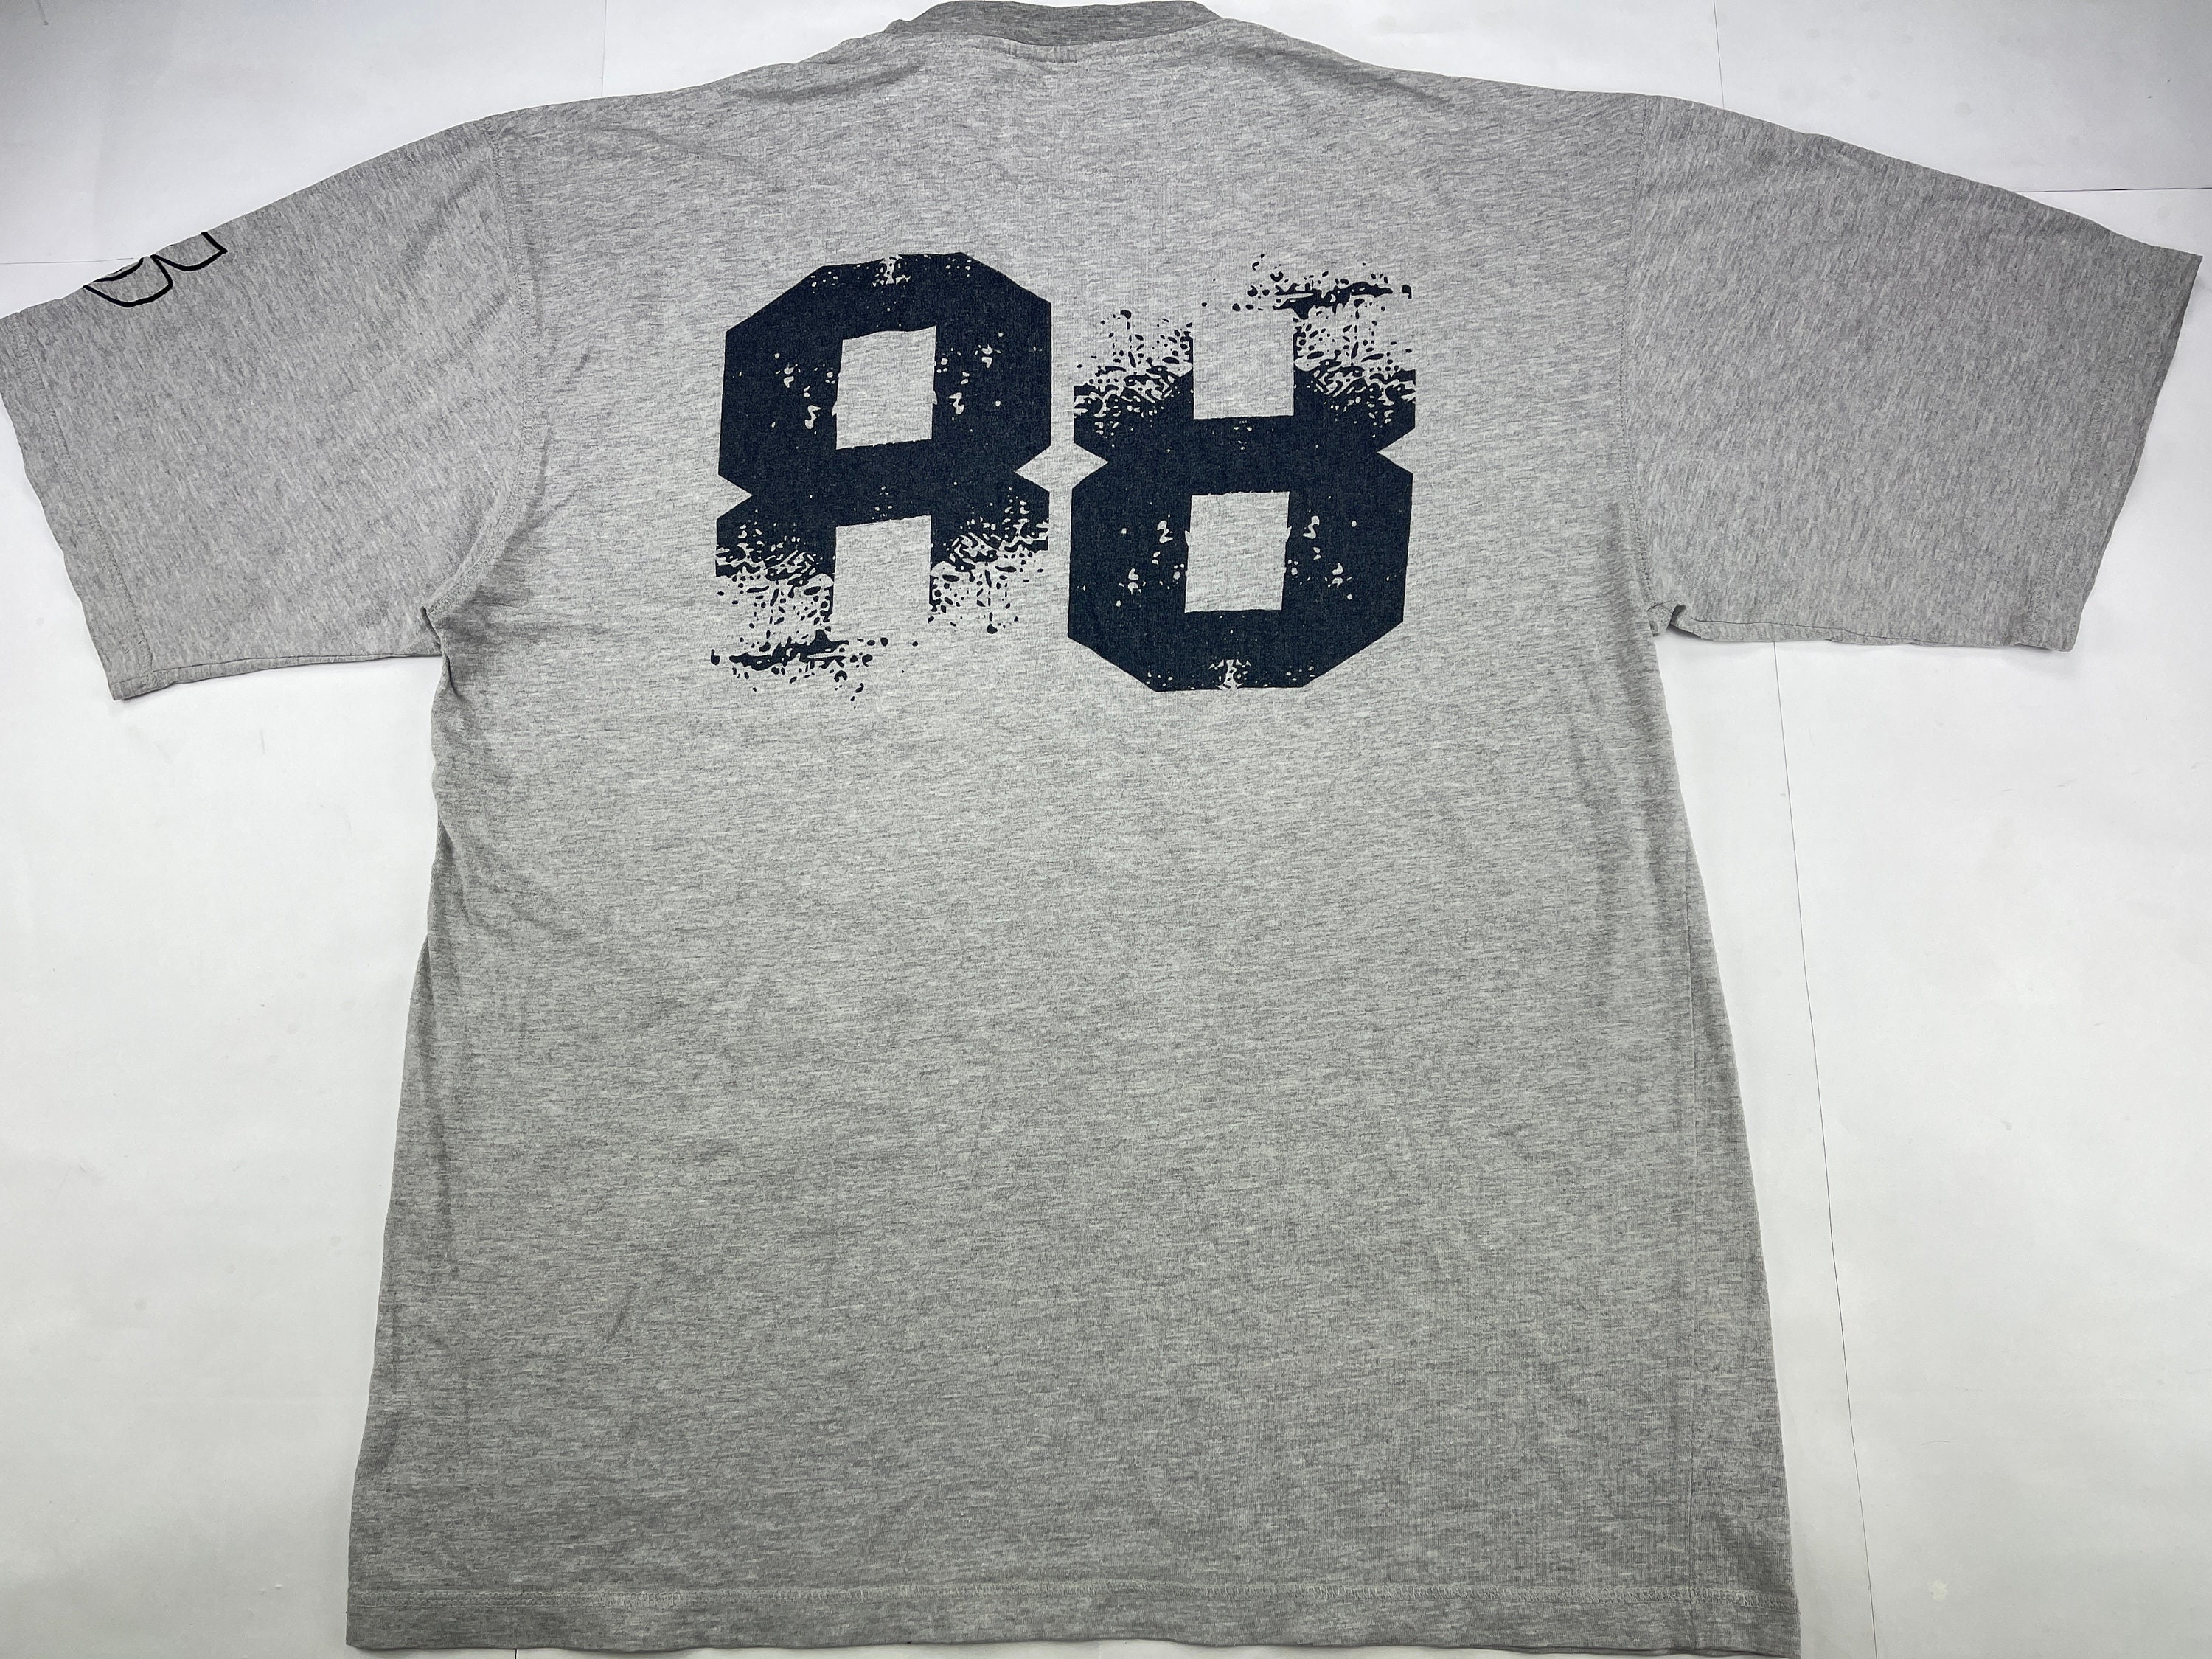 Ruff Ryders t-shirt vintage DMX jersey 90s hip hop clothing | Etsy